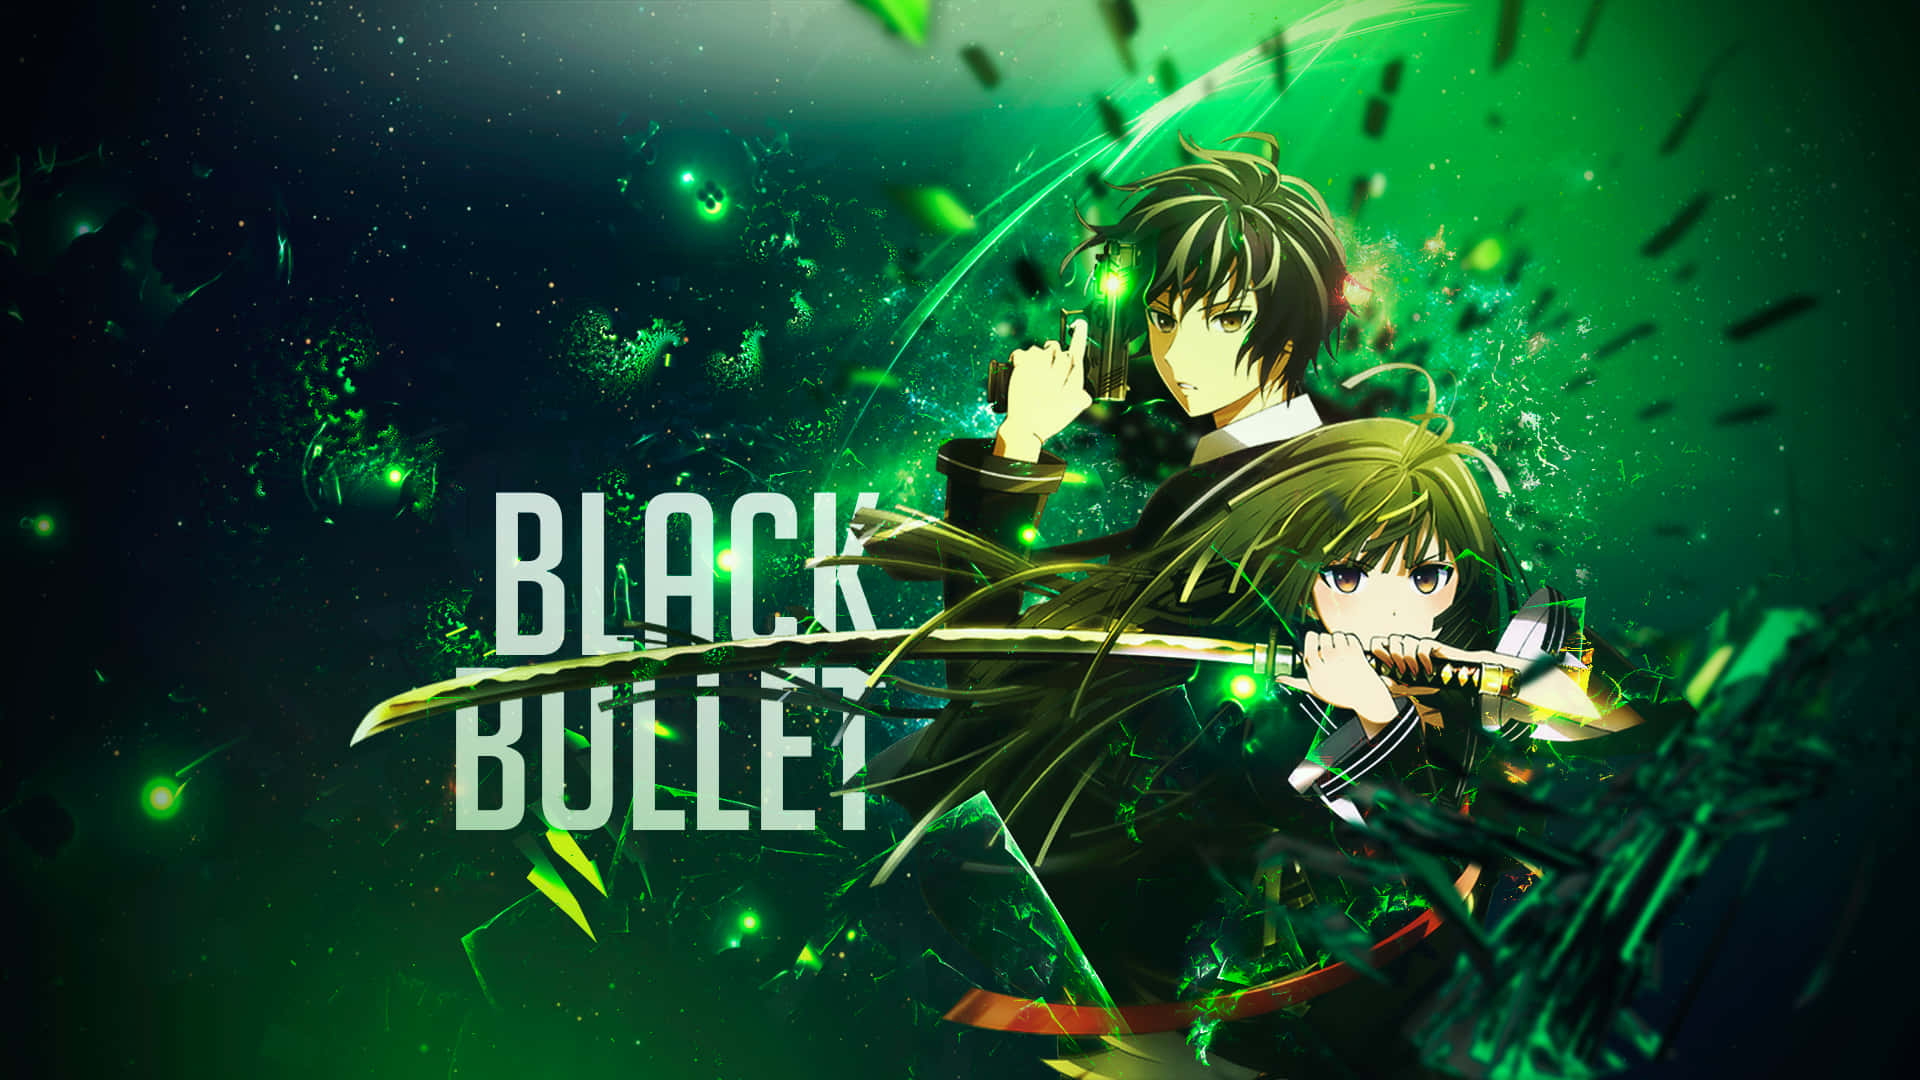 Black Bullet Pictures